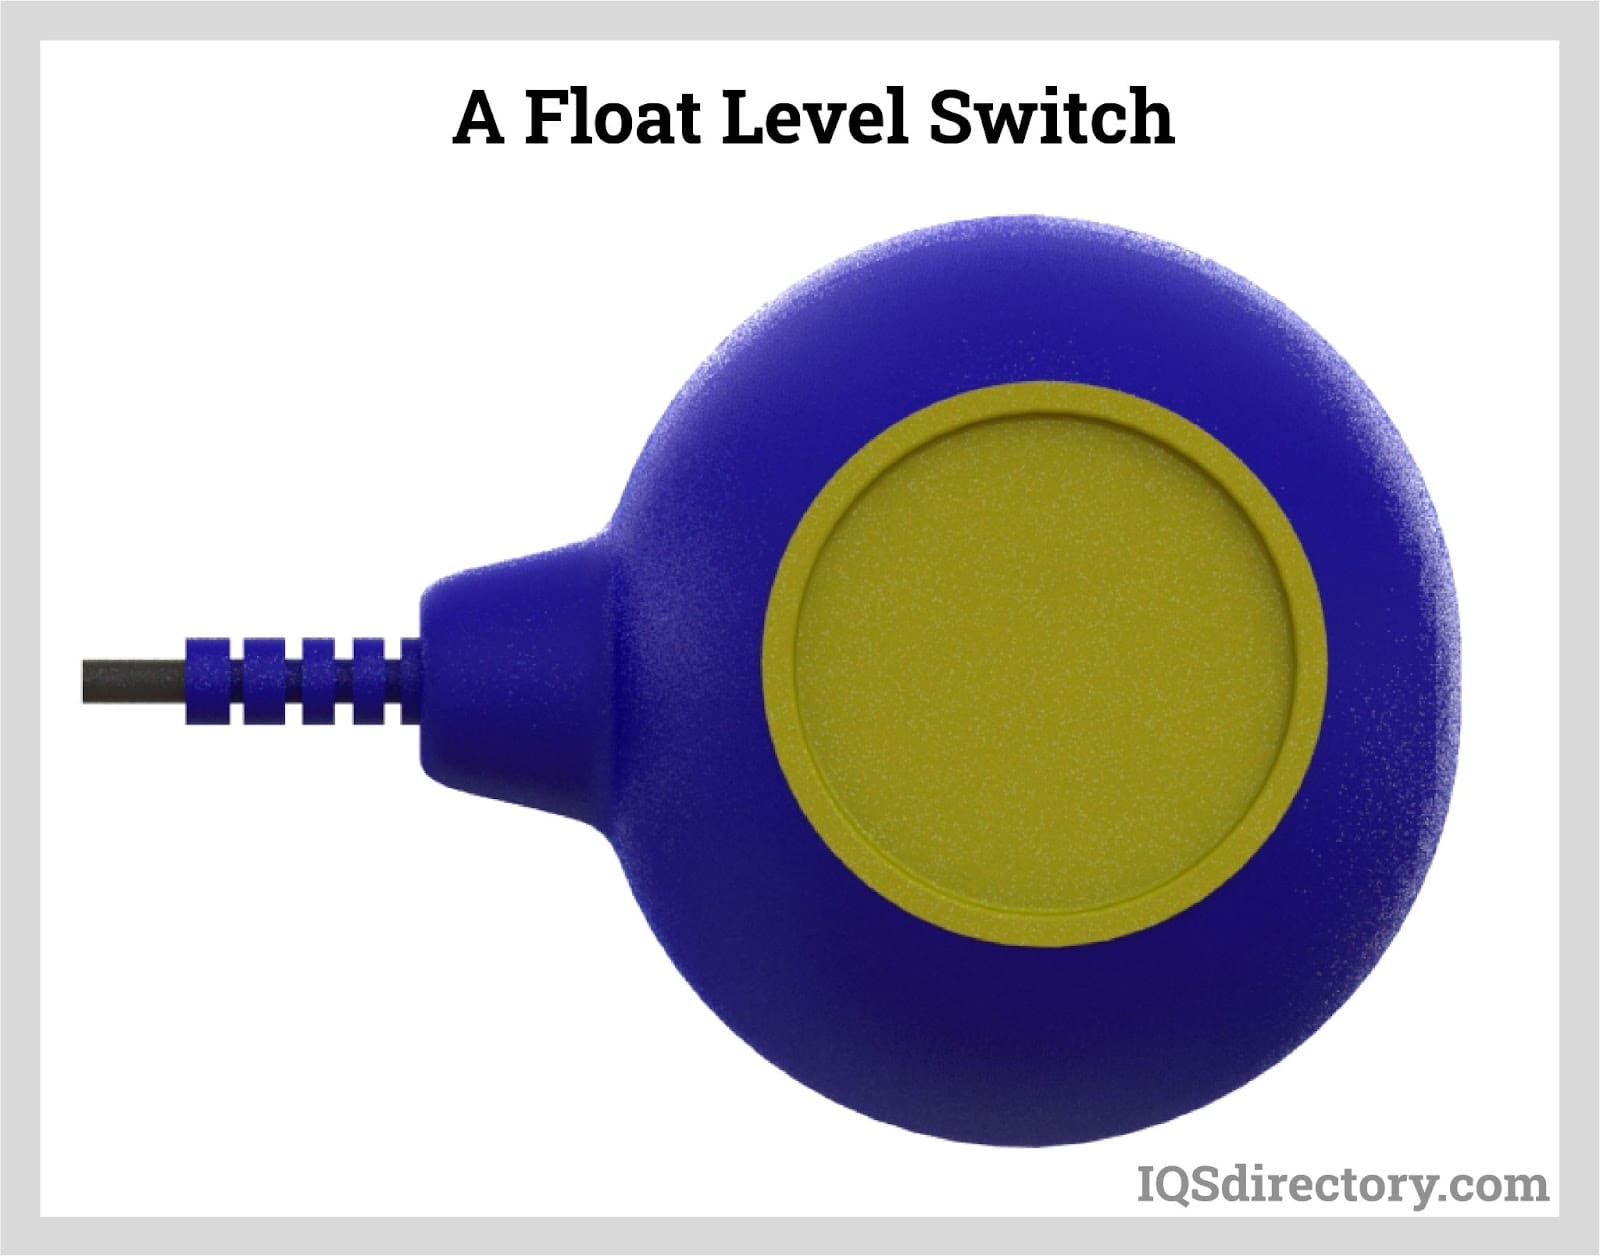 Float Level Switch